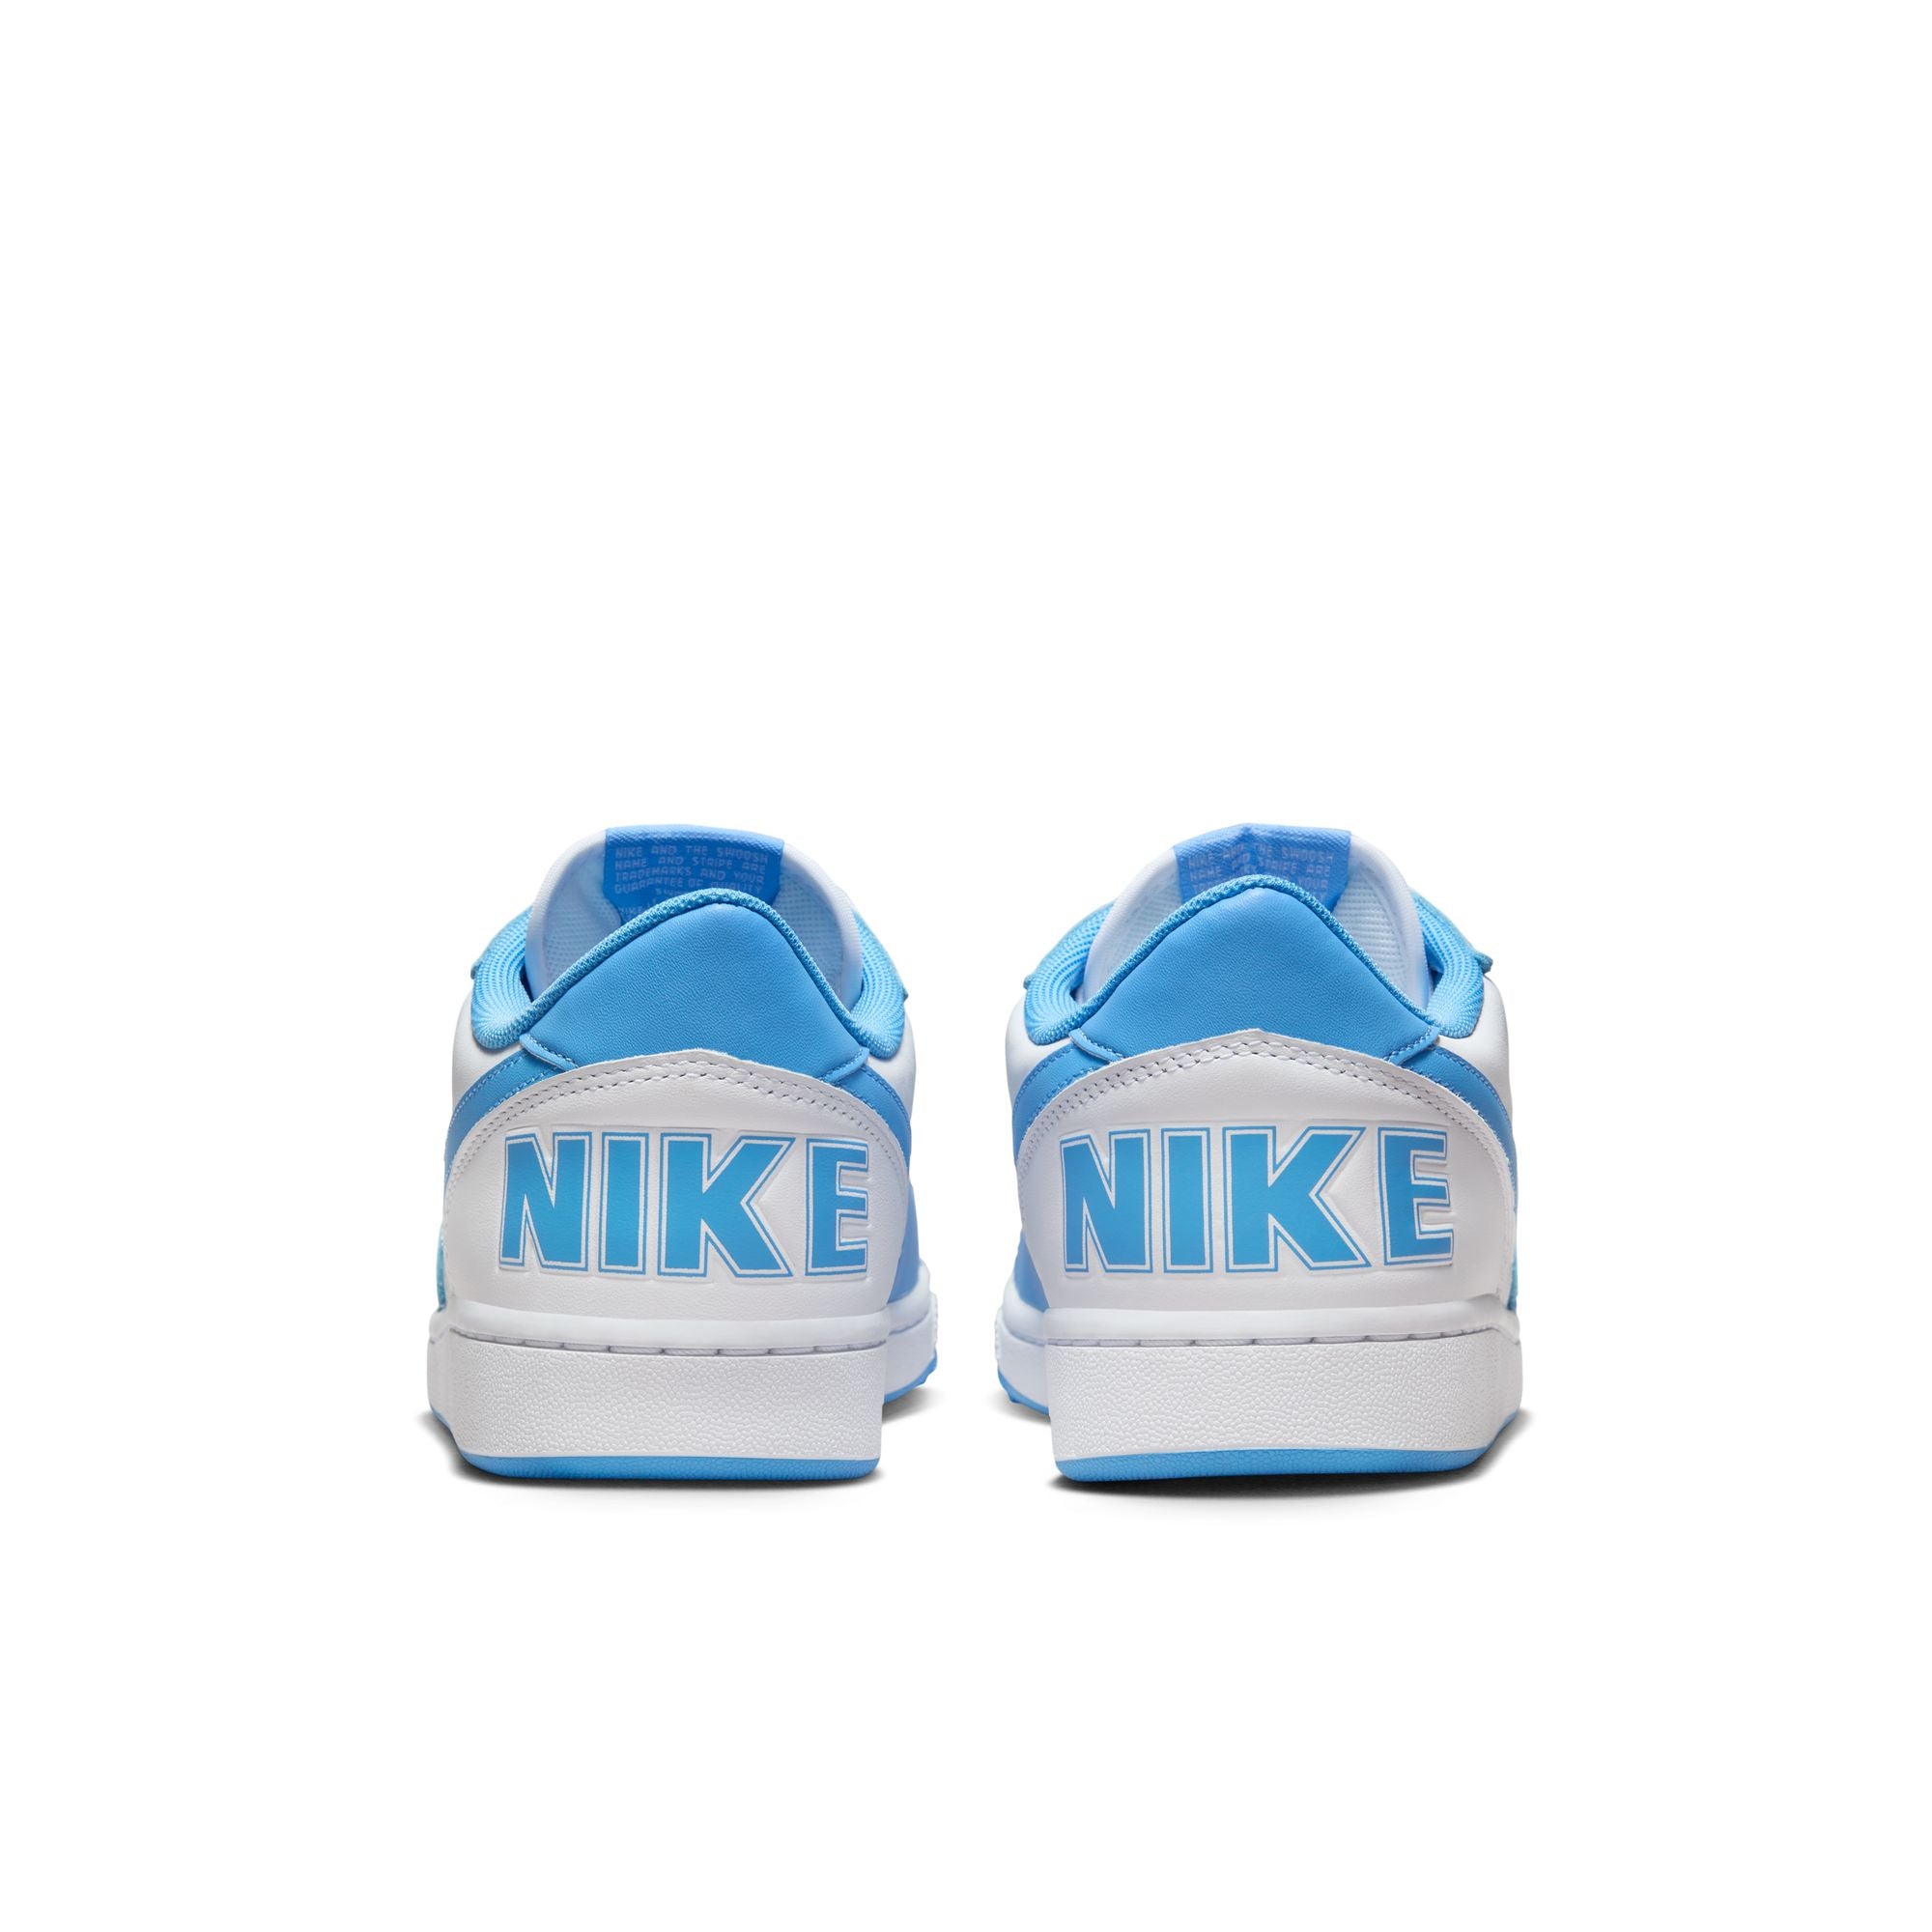 NIKE - Nike Terminator Low - (Univ Blue/White) view 7